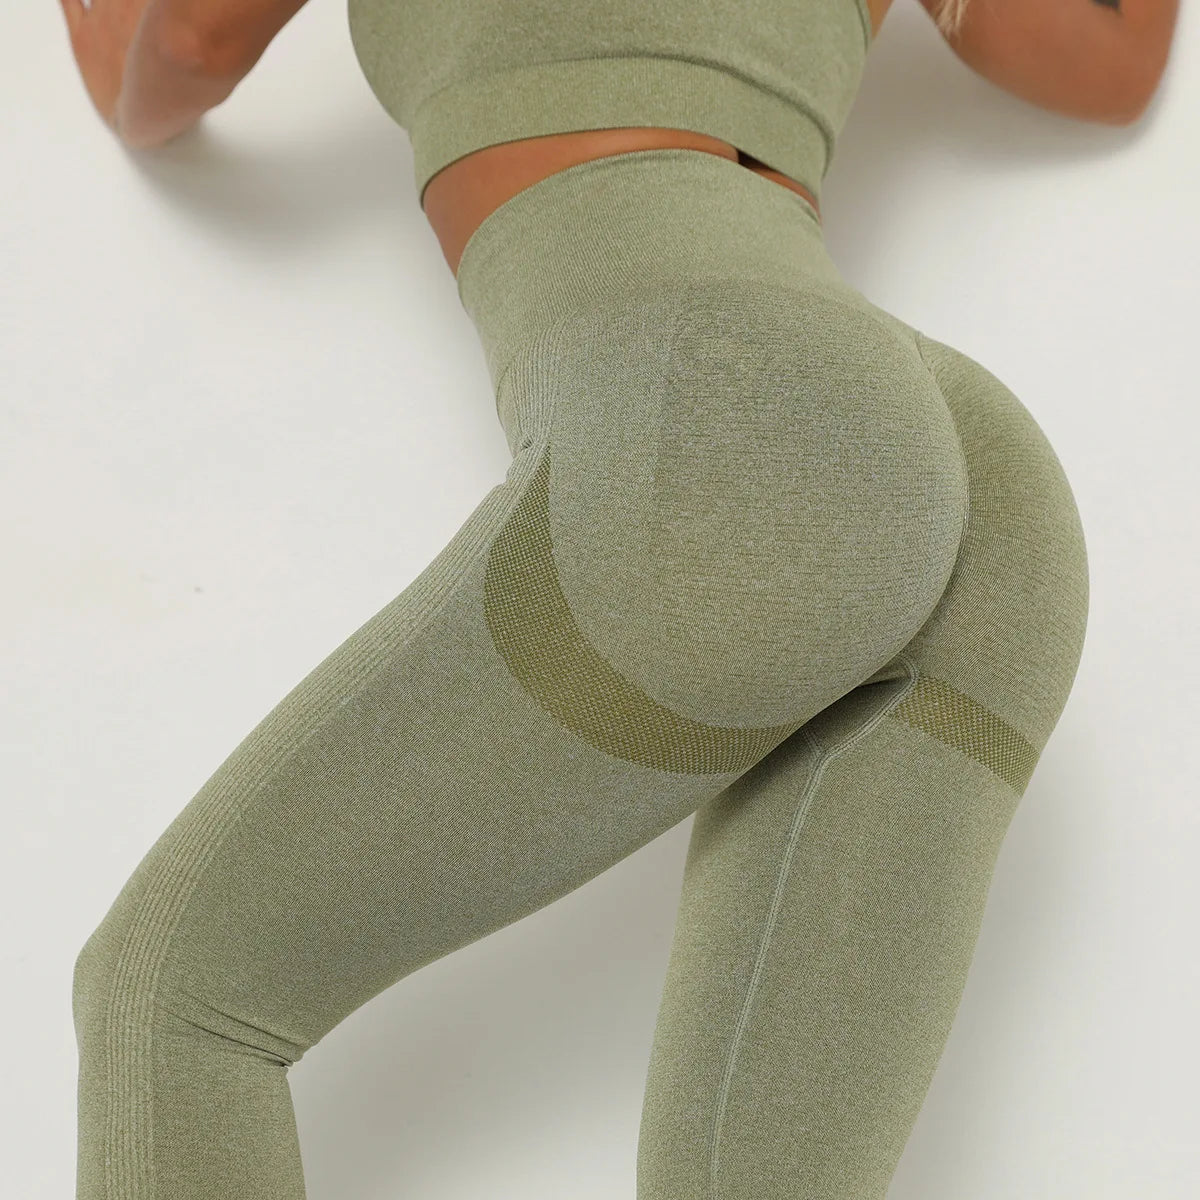 Women Yoga Pants Leggings High Waist Exercise Sports Trousers Running Fitness Gym Leggings Hip Lifting Femme Pants Light green / XL - IHavePaws